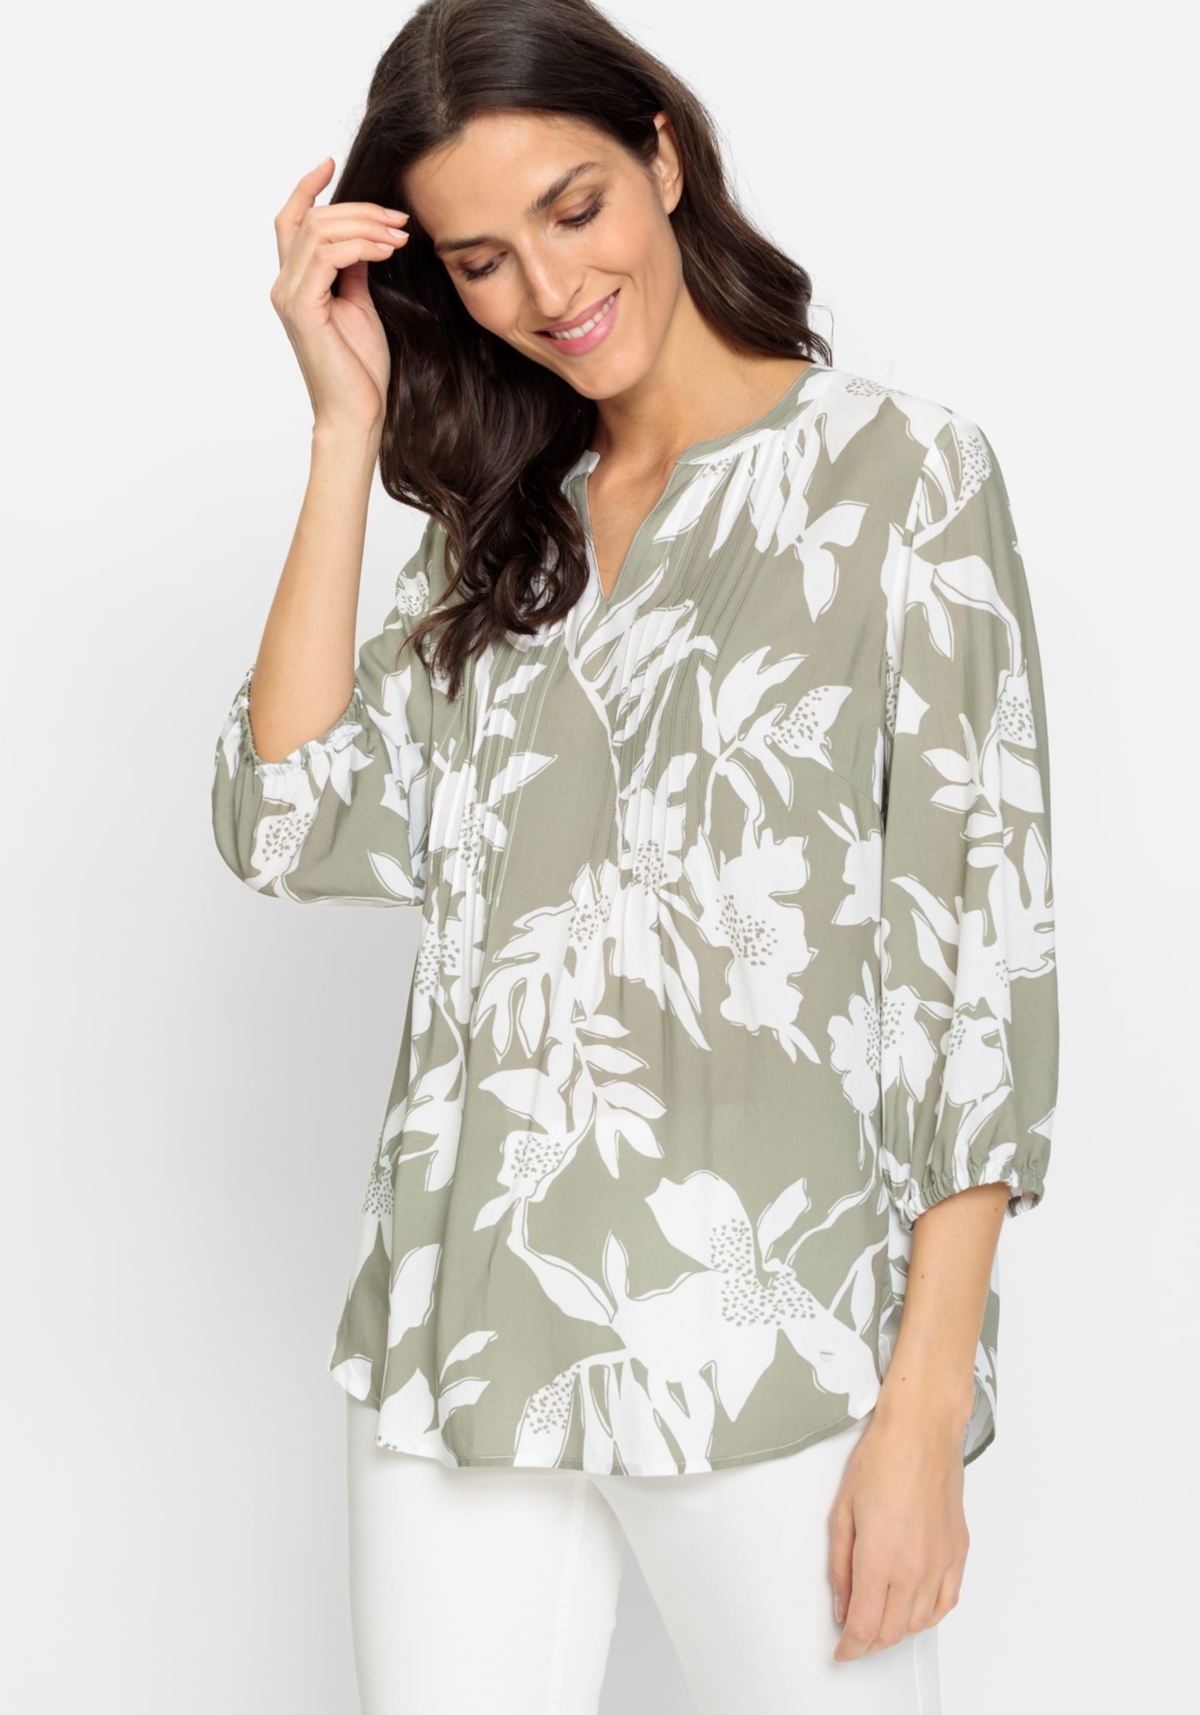 Women's Pure Viscose 3/4 Sleeve Abstract Floral Tunic Blouse - Light khaki